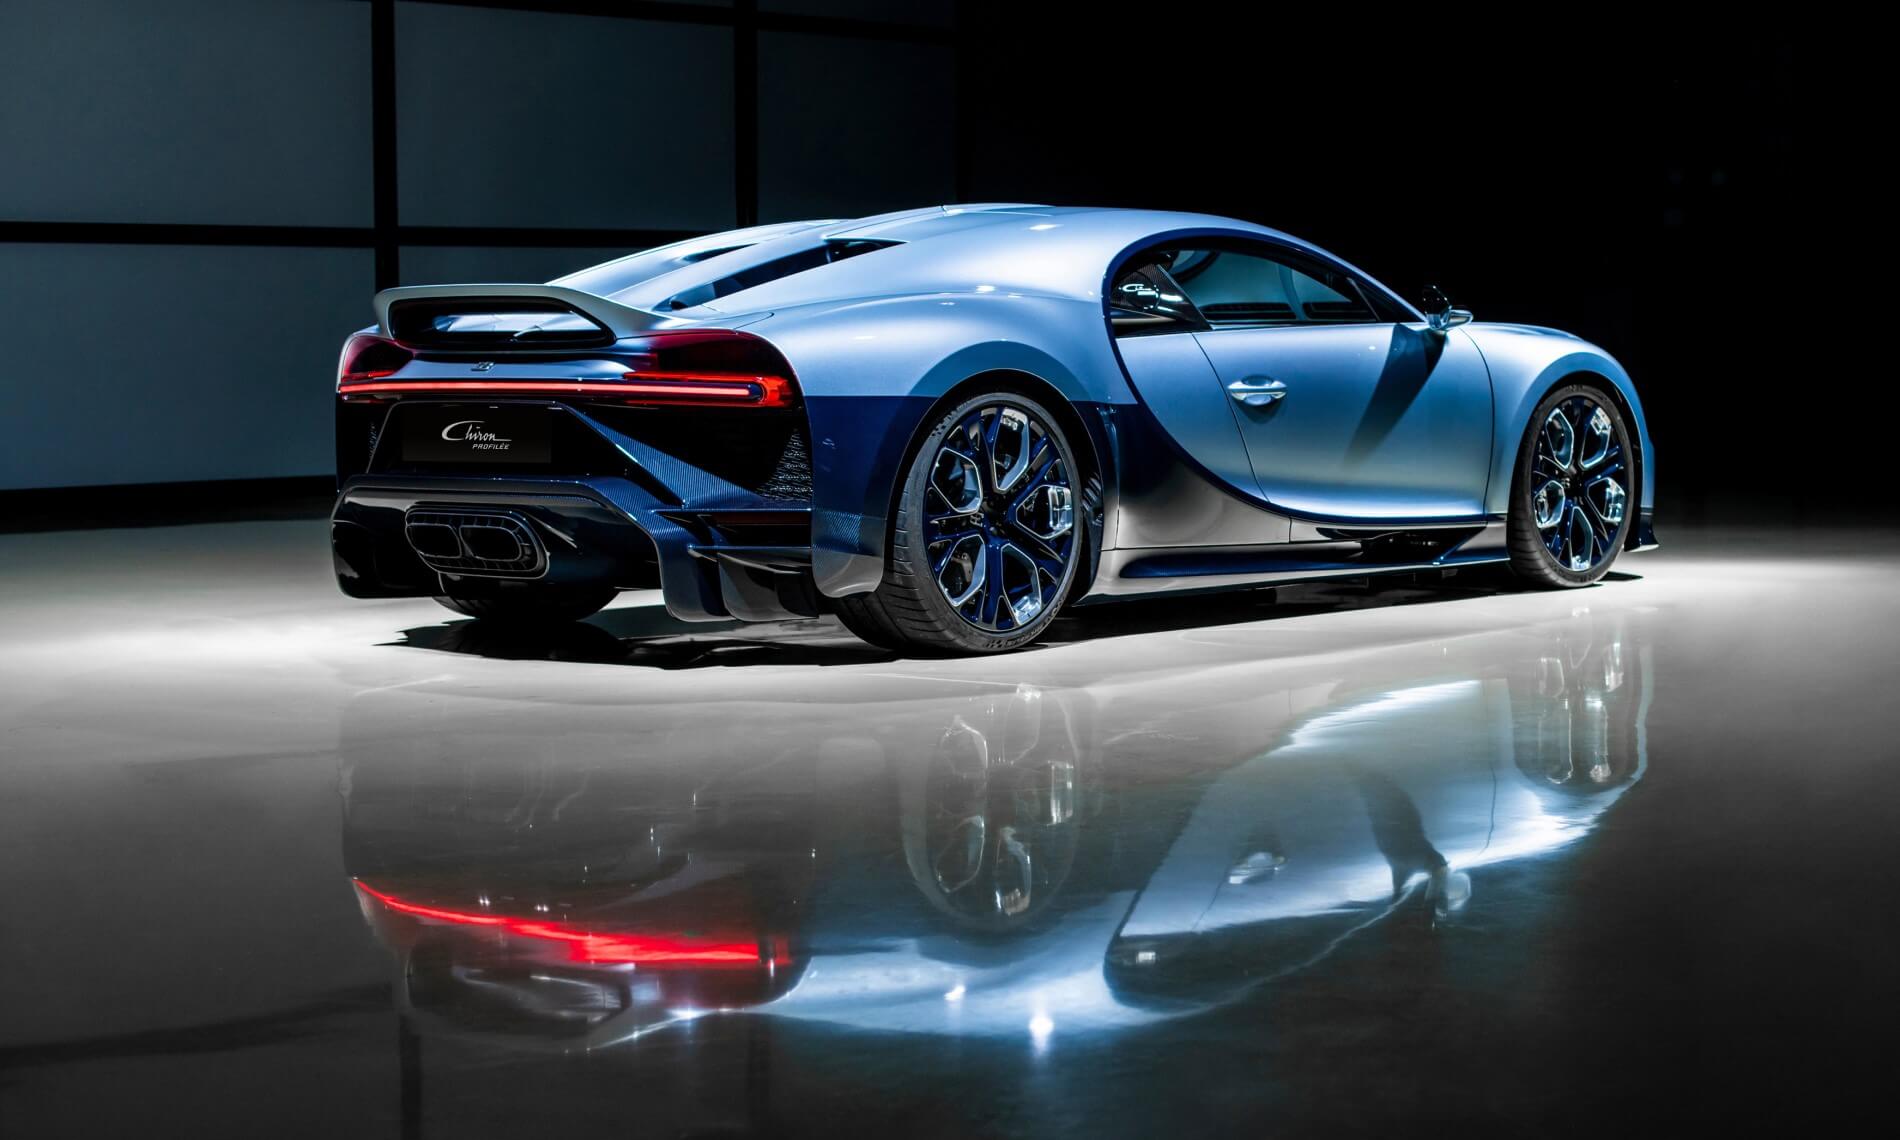 Bugatti Chiron Profilée rear